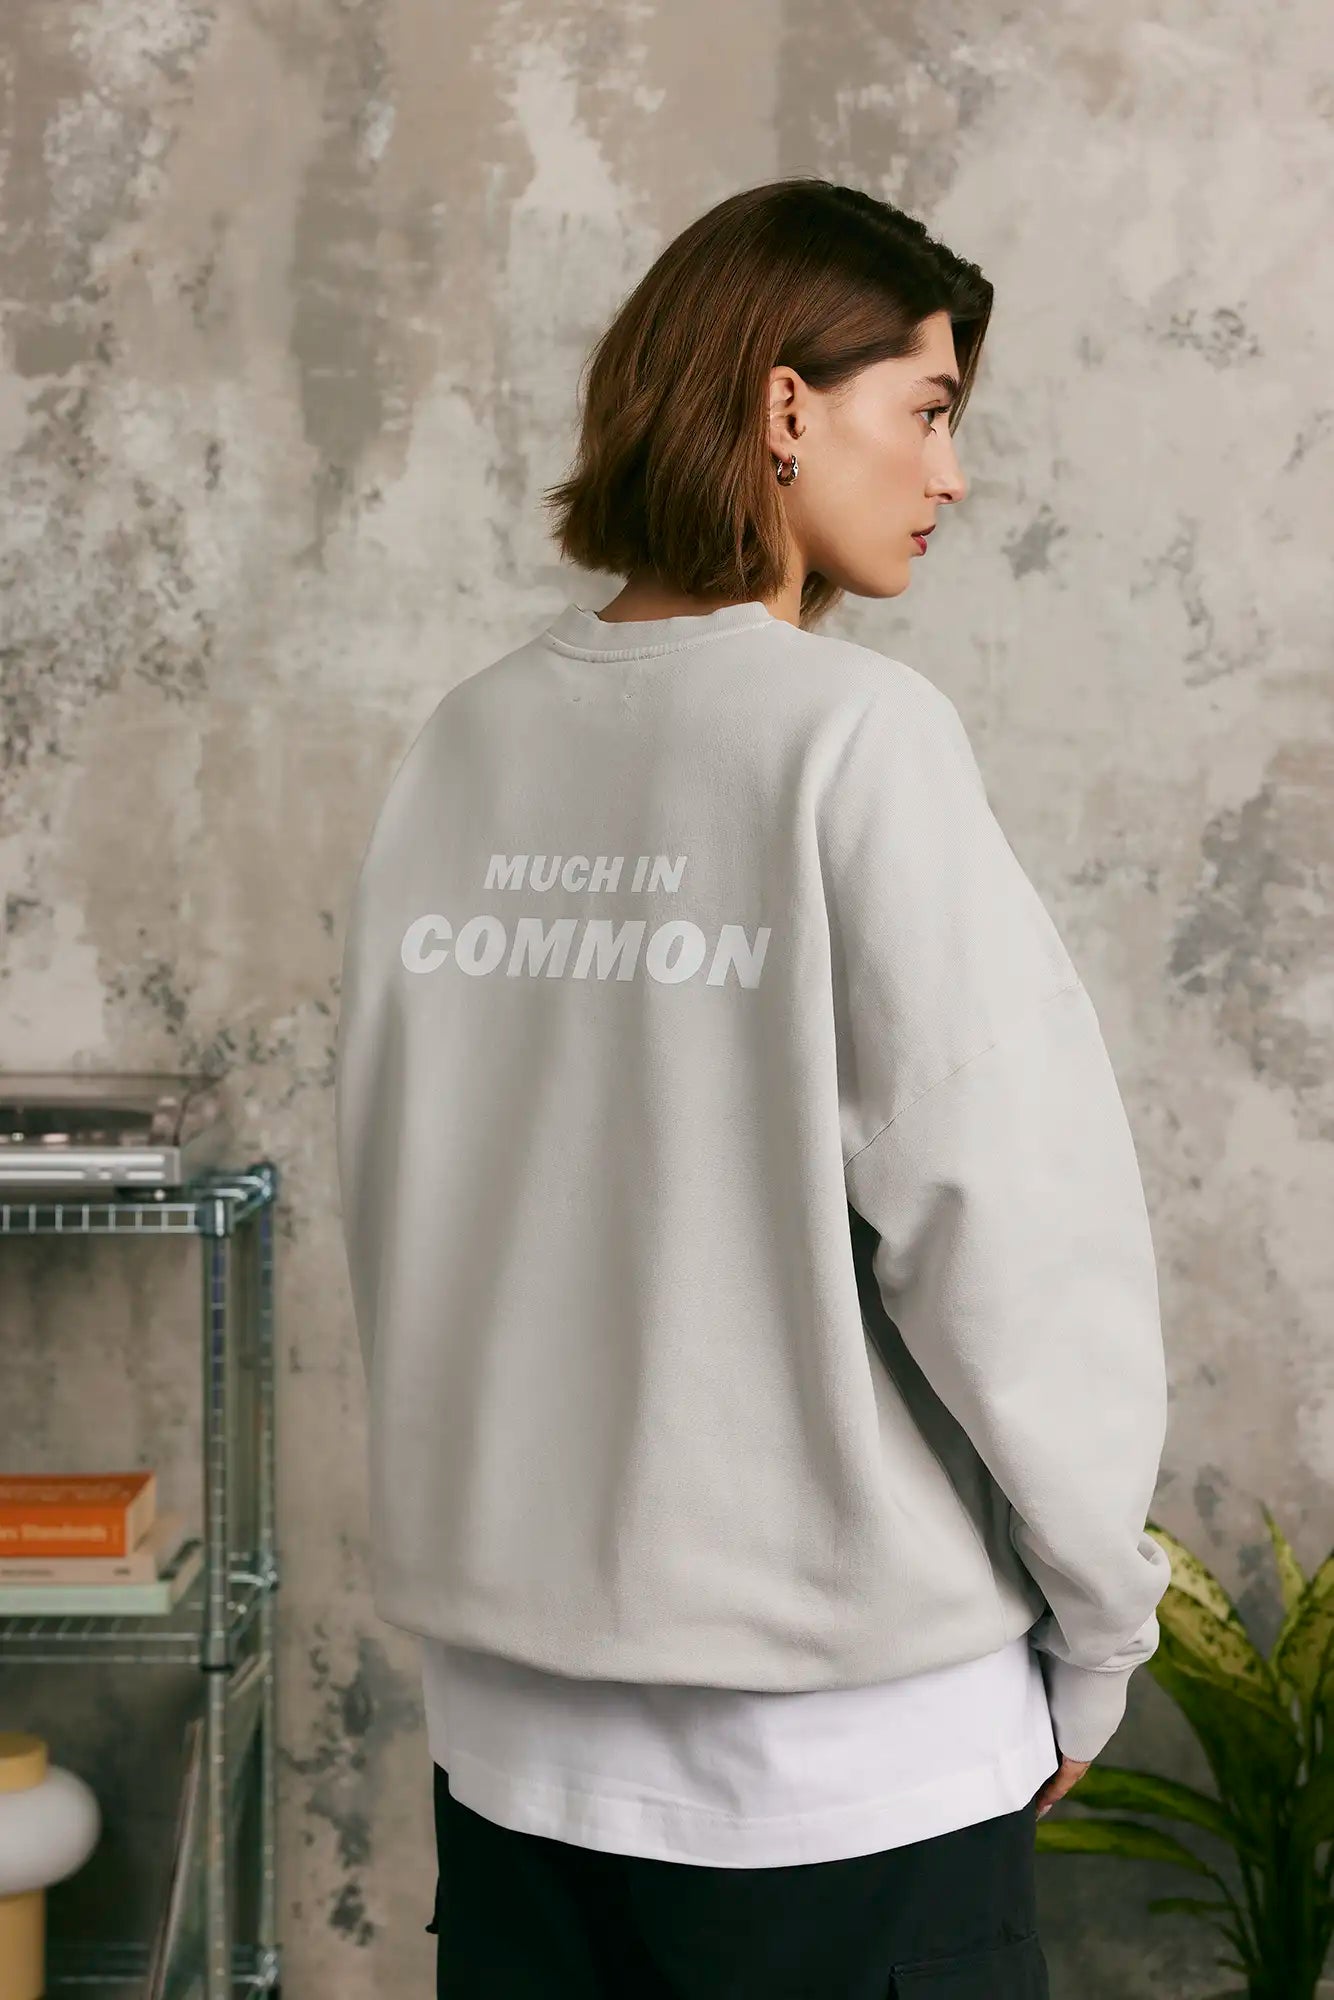 Much in Common Sweatshirt